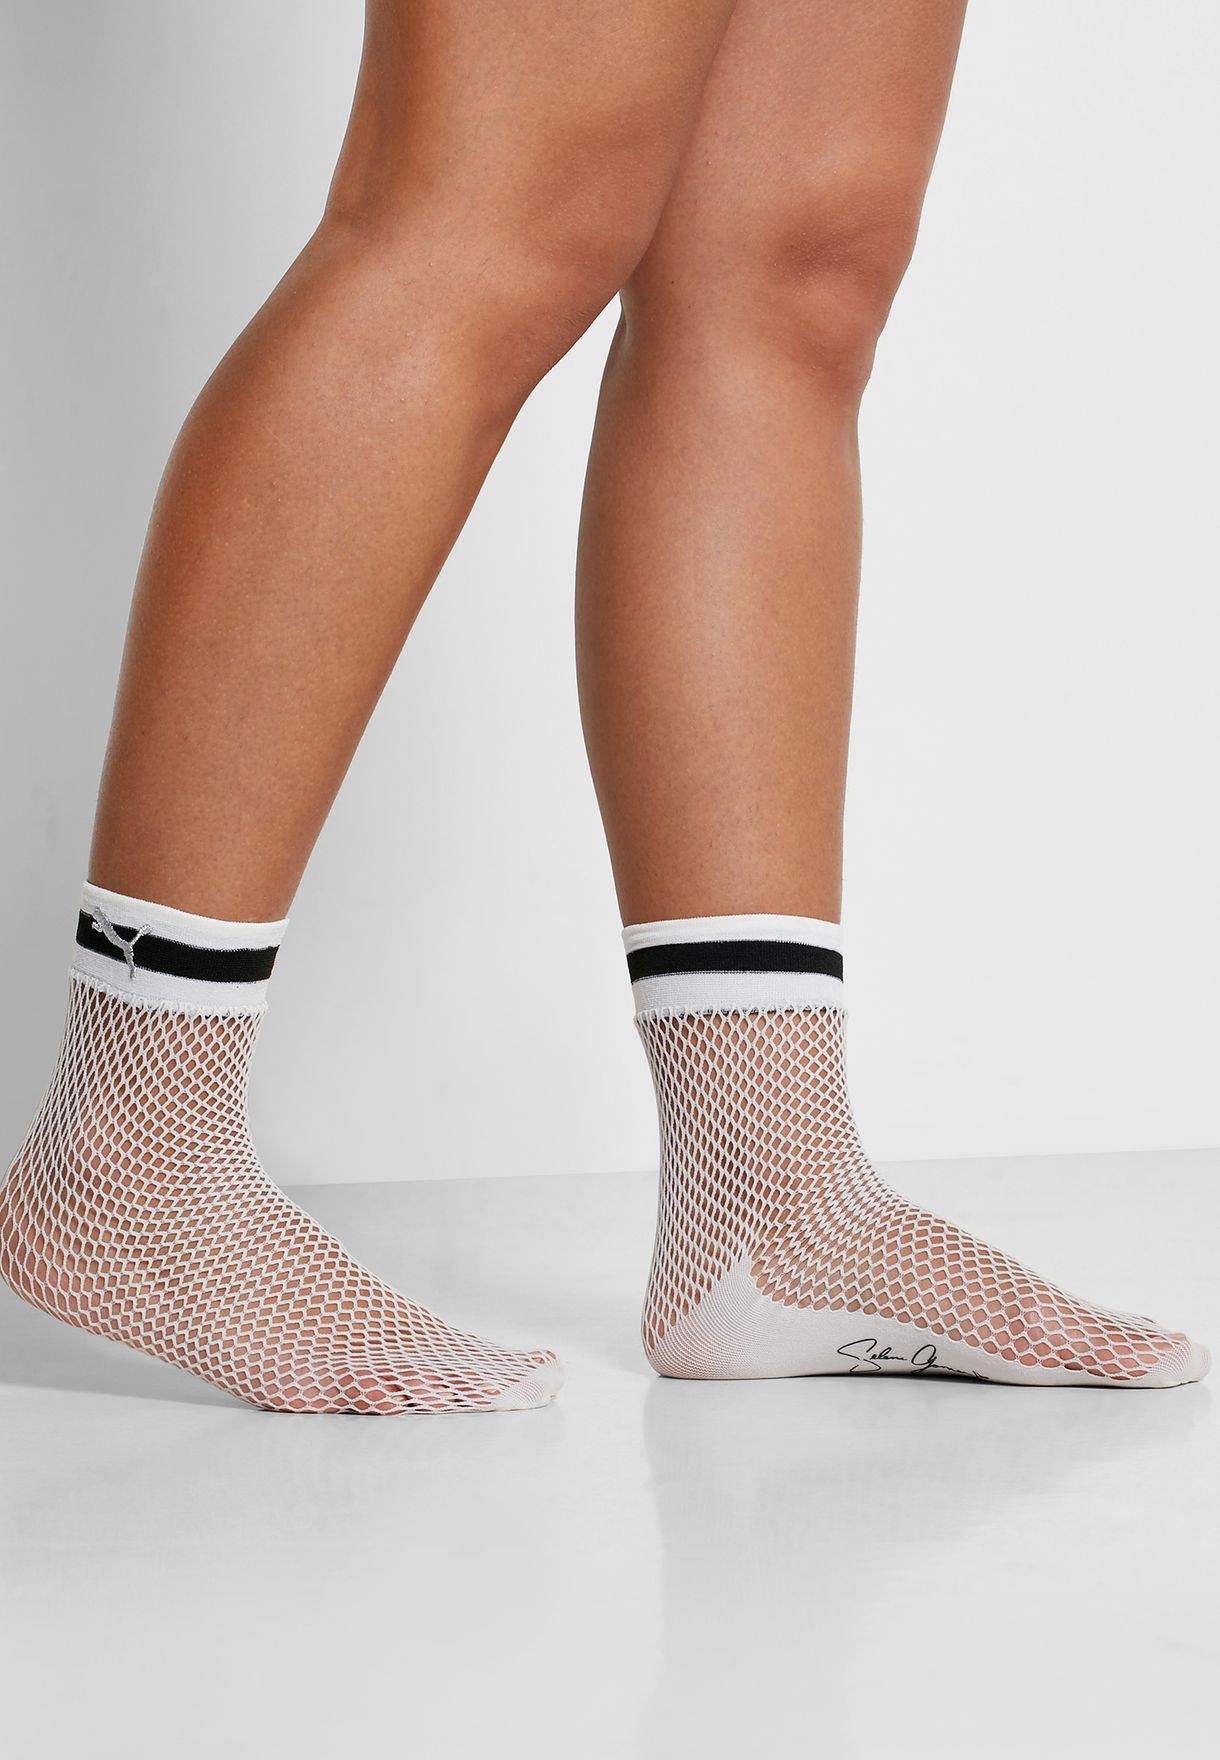 puma selena gomez socks